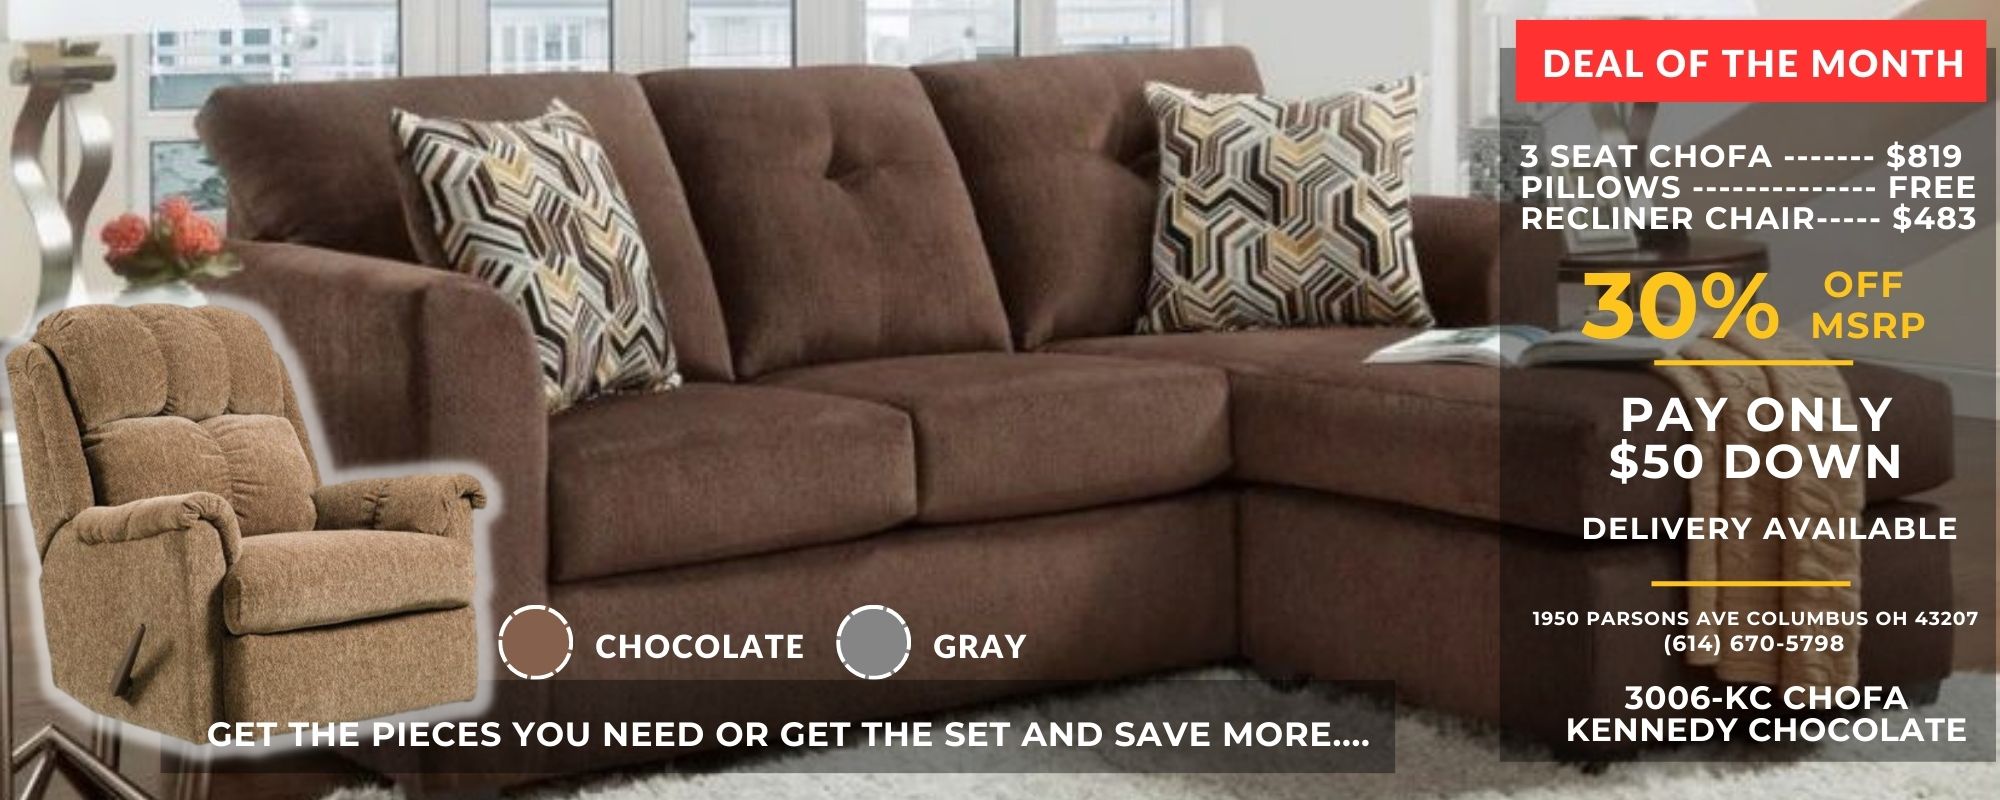 3006 KG Chofa Grey + Chair Deal | Living Room Furniture Sales.